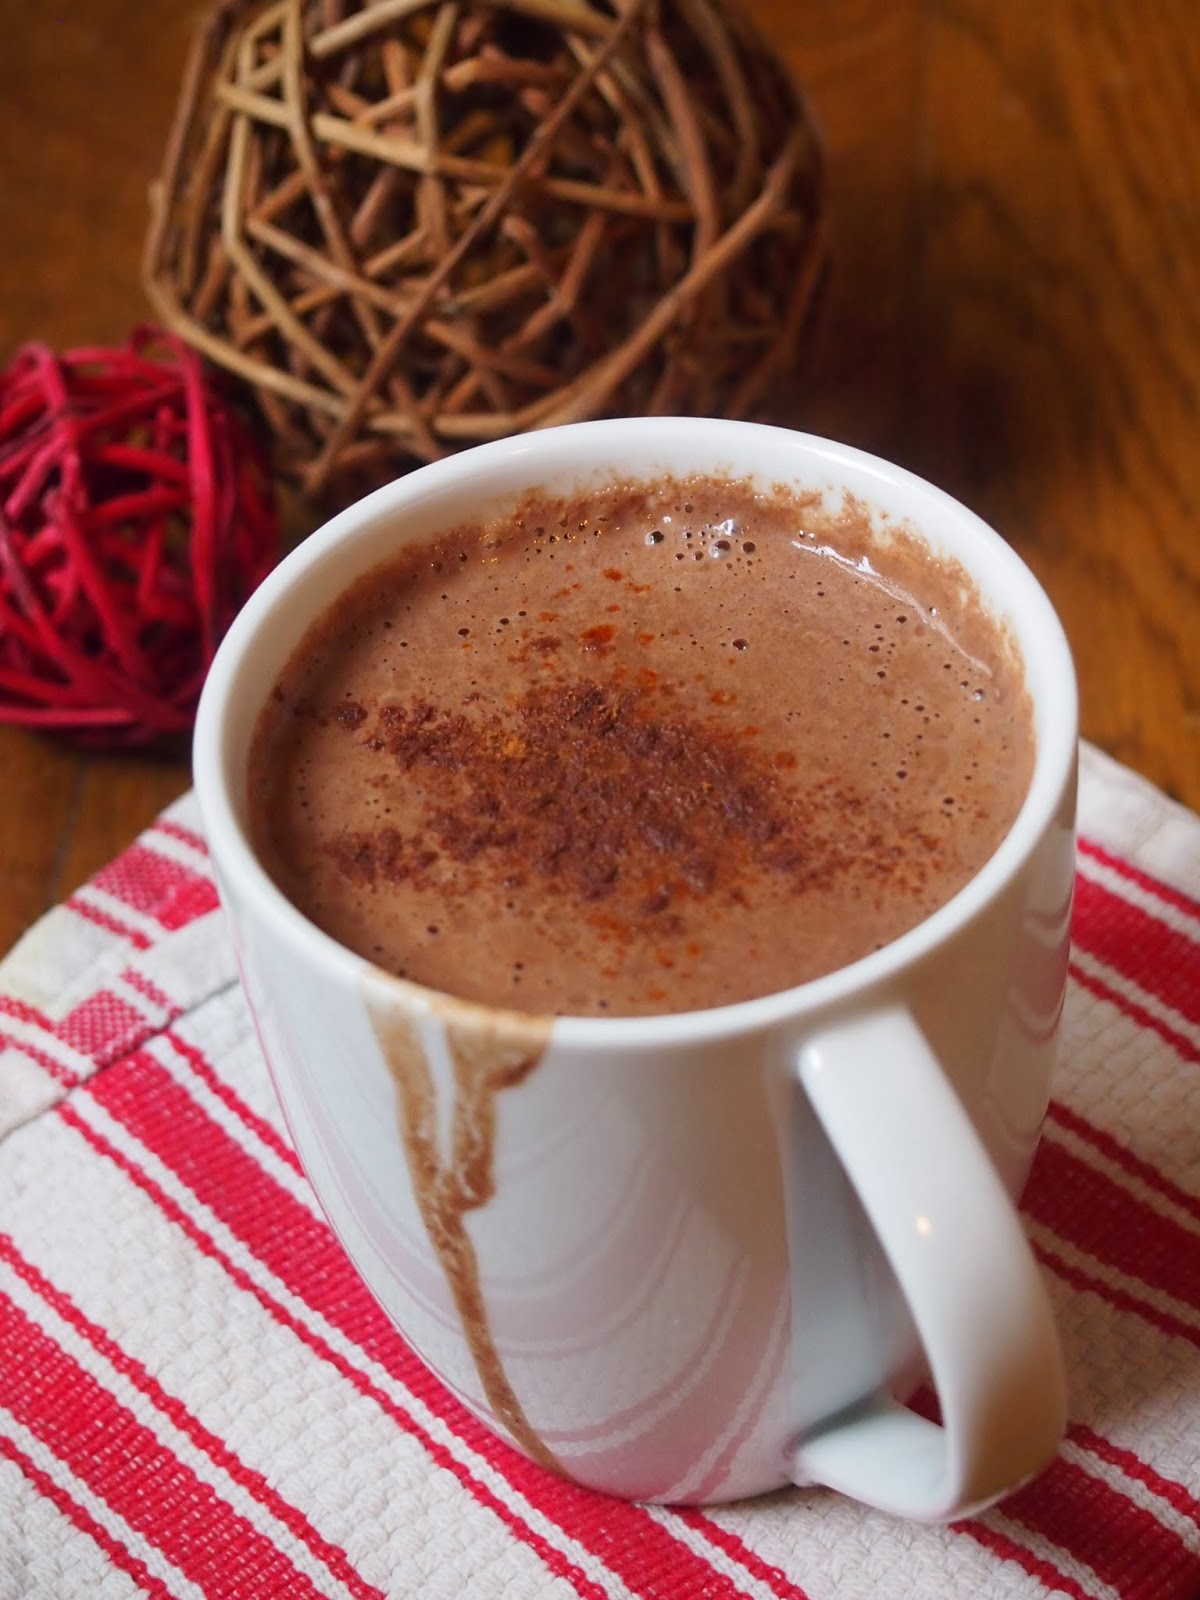 An Avocado A Day: Mexican Hot Chocolate